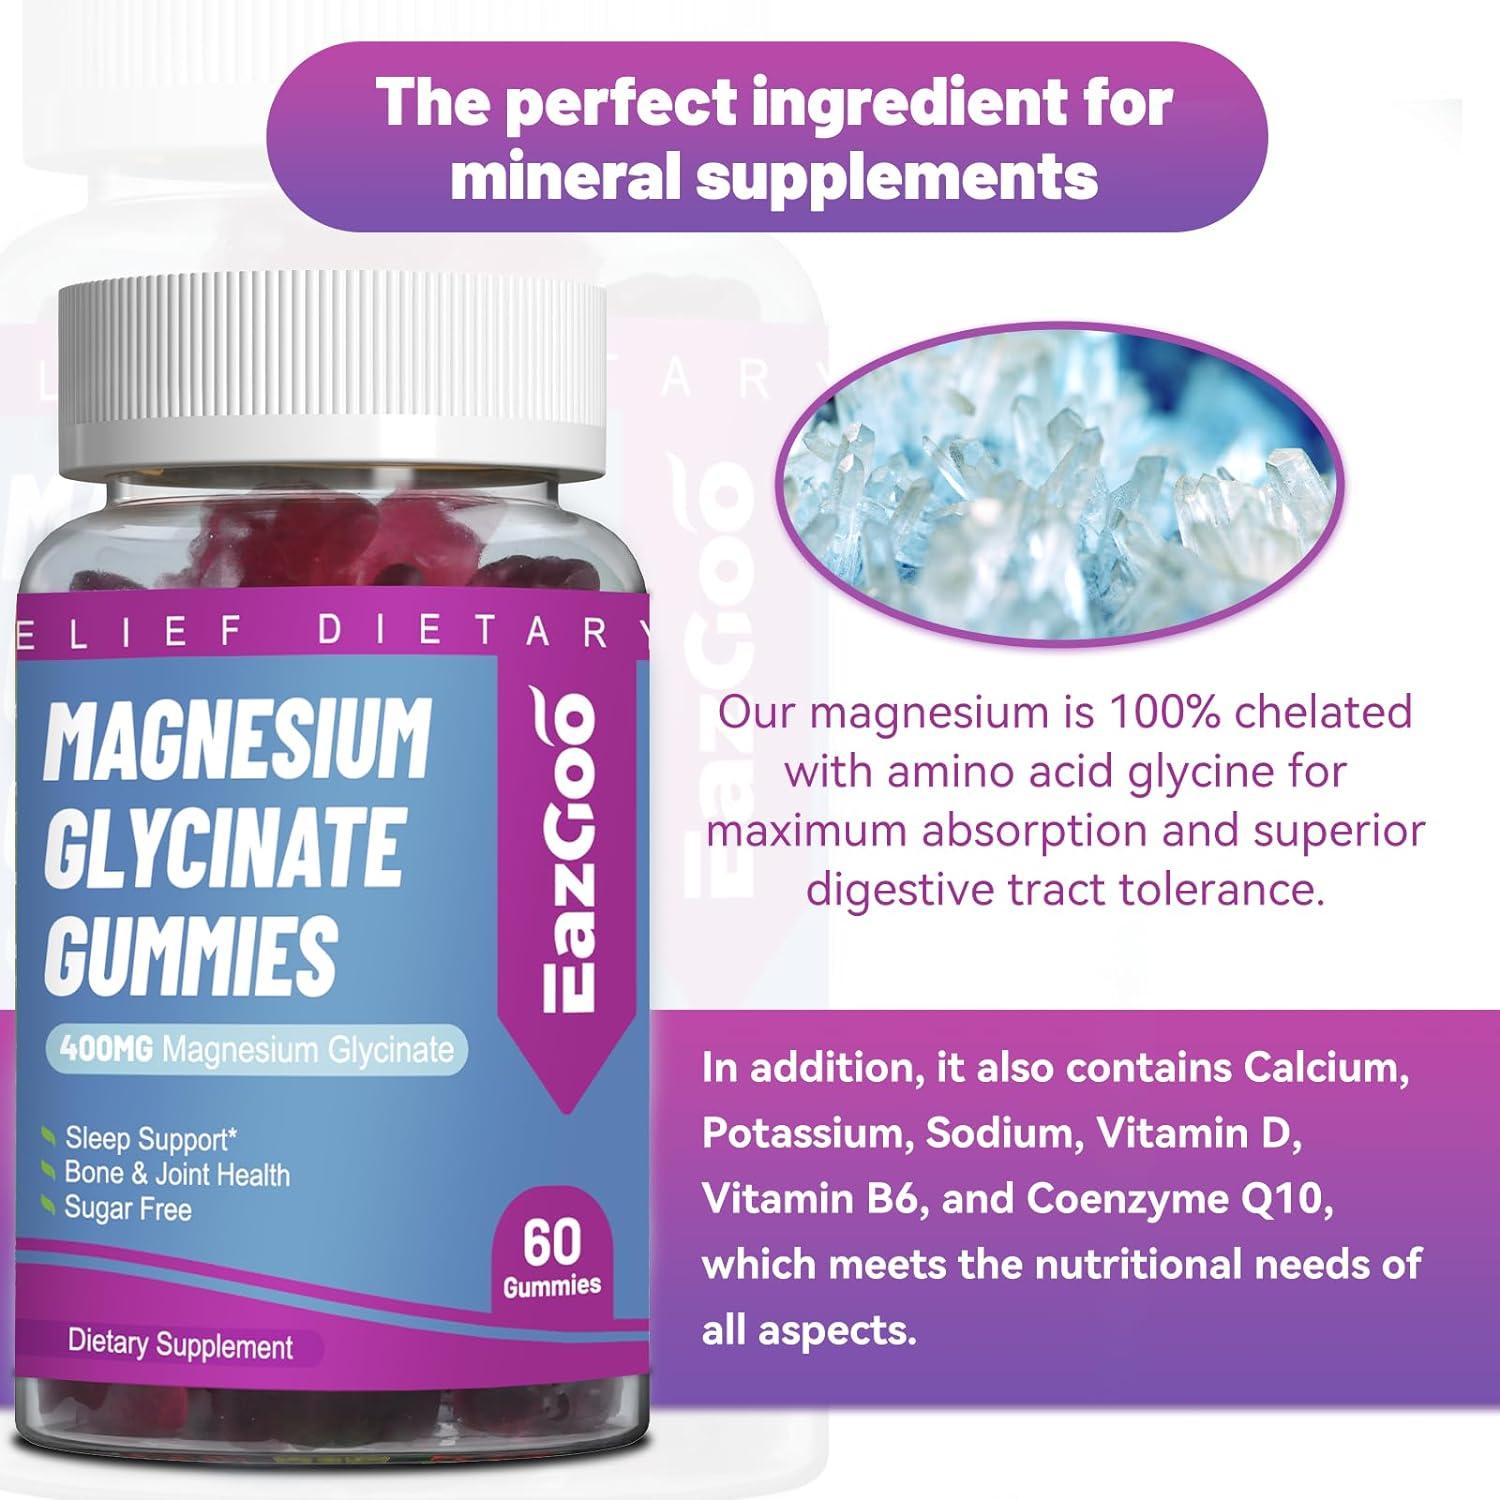  Potassium Magnesium Supplement – Potassium 200mg +